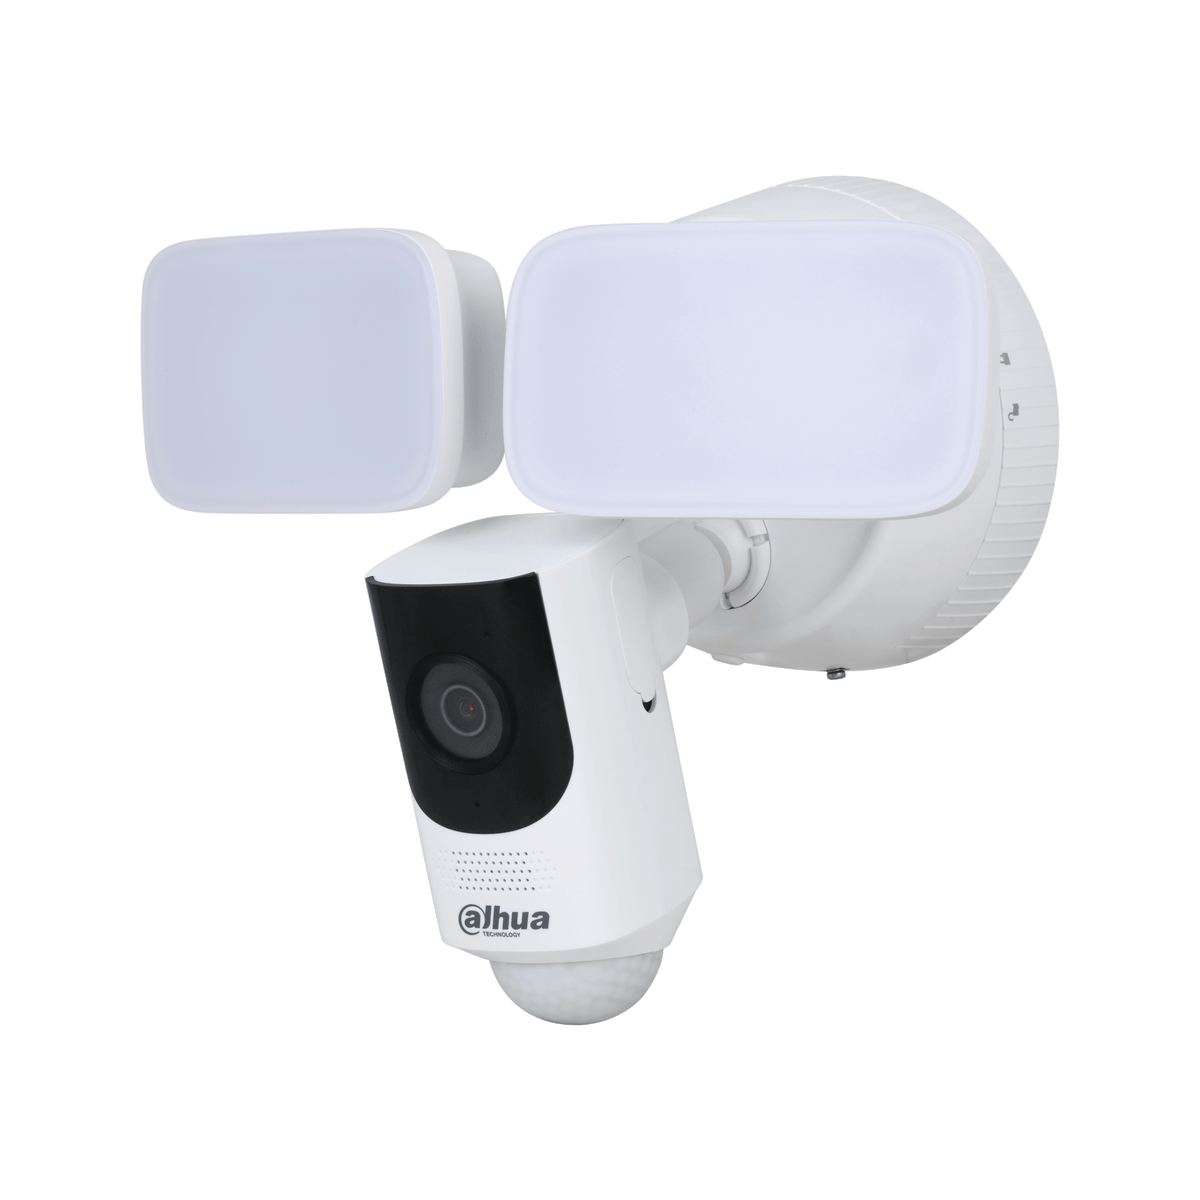 DAHUA IPC-WL46A 4MP Fixed-focal Floodlight Network Camera